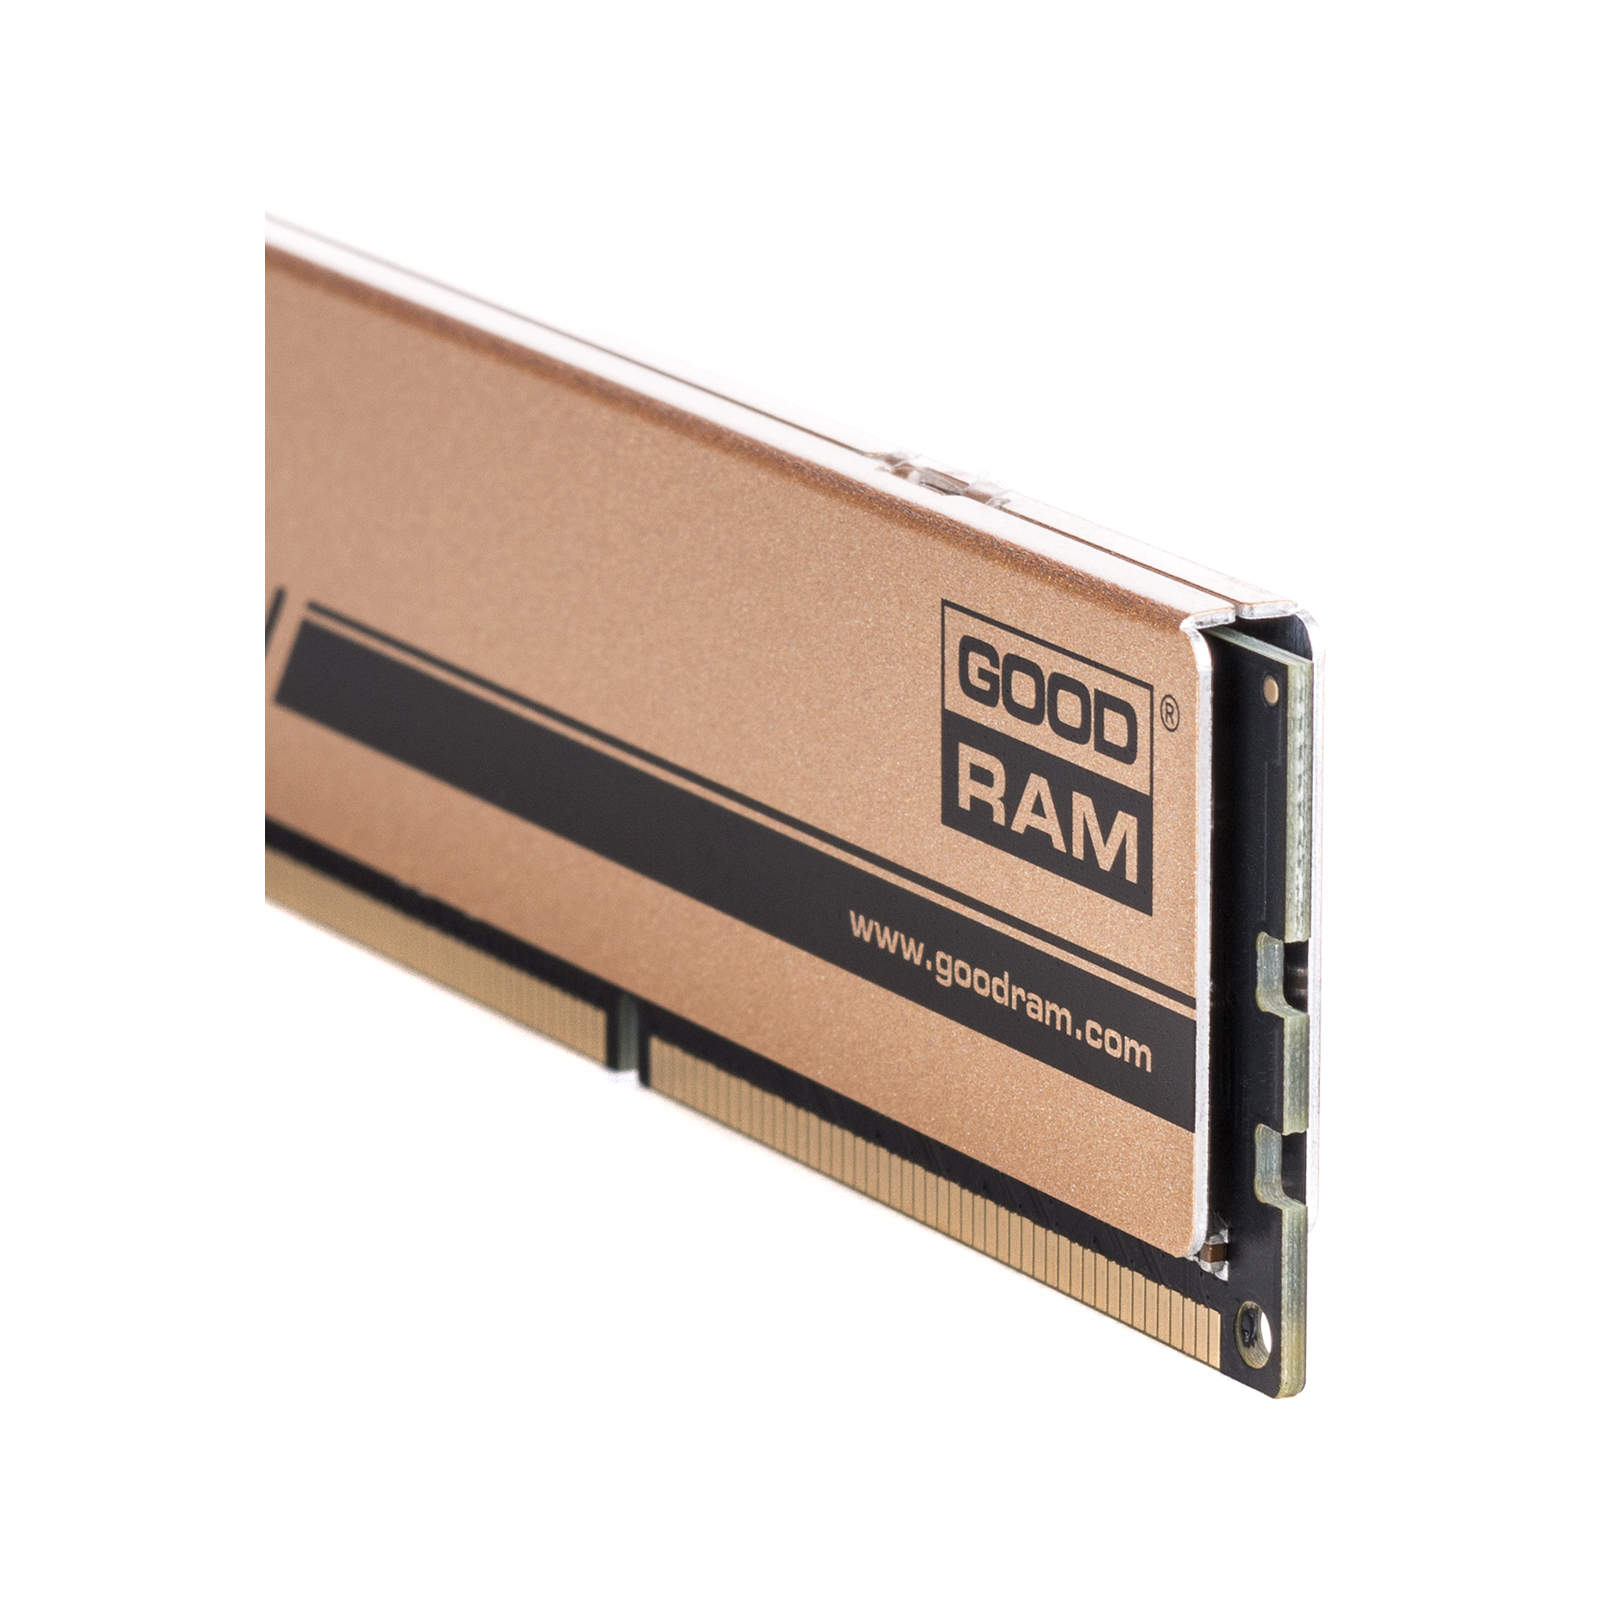 Модуль памяти для компьютера DDR3 8GB 1600 MHz PLAY Gold Goodram (GYG1600D364L10/8G) изображение 5